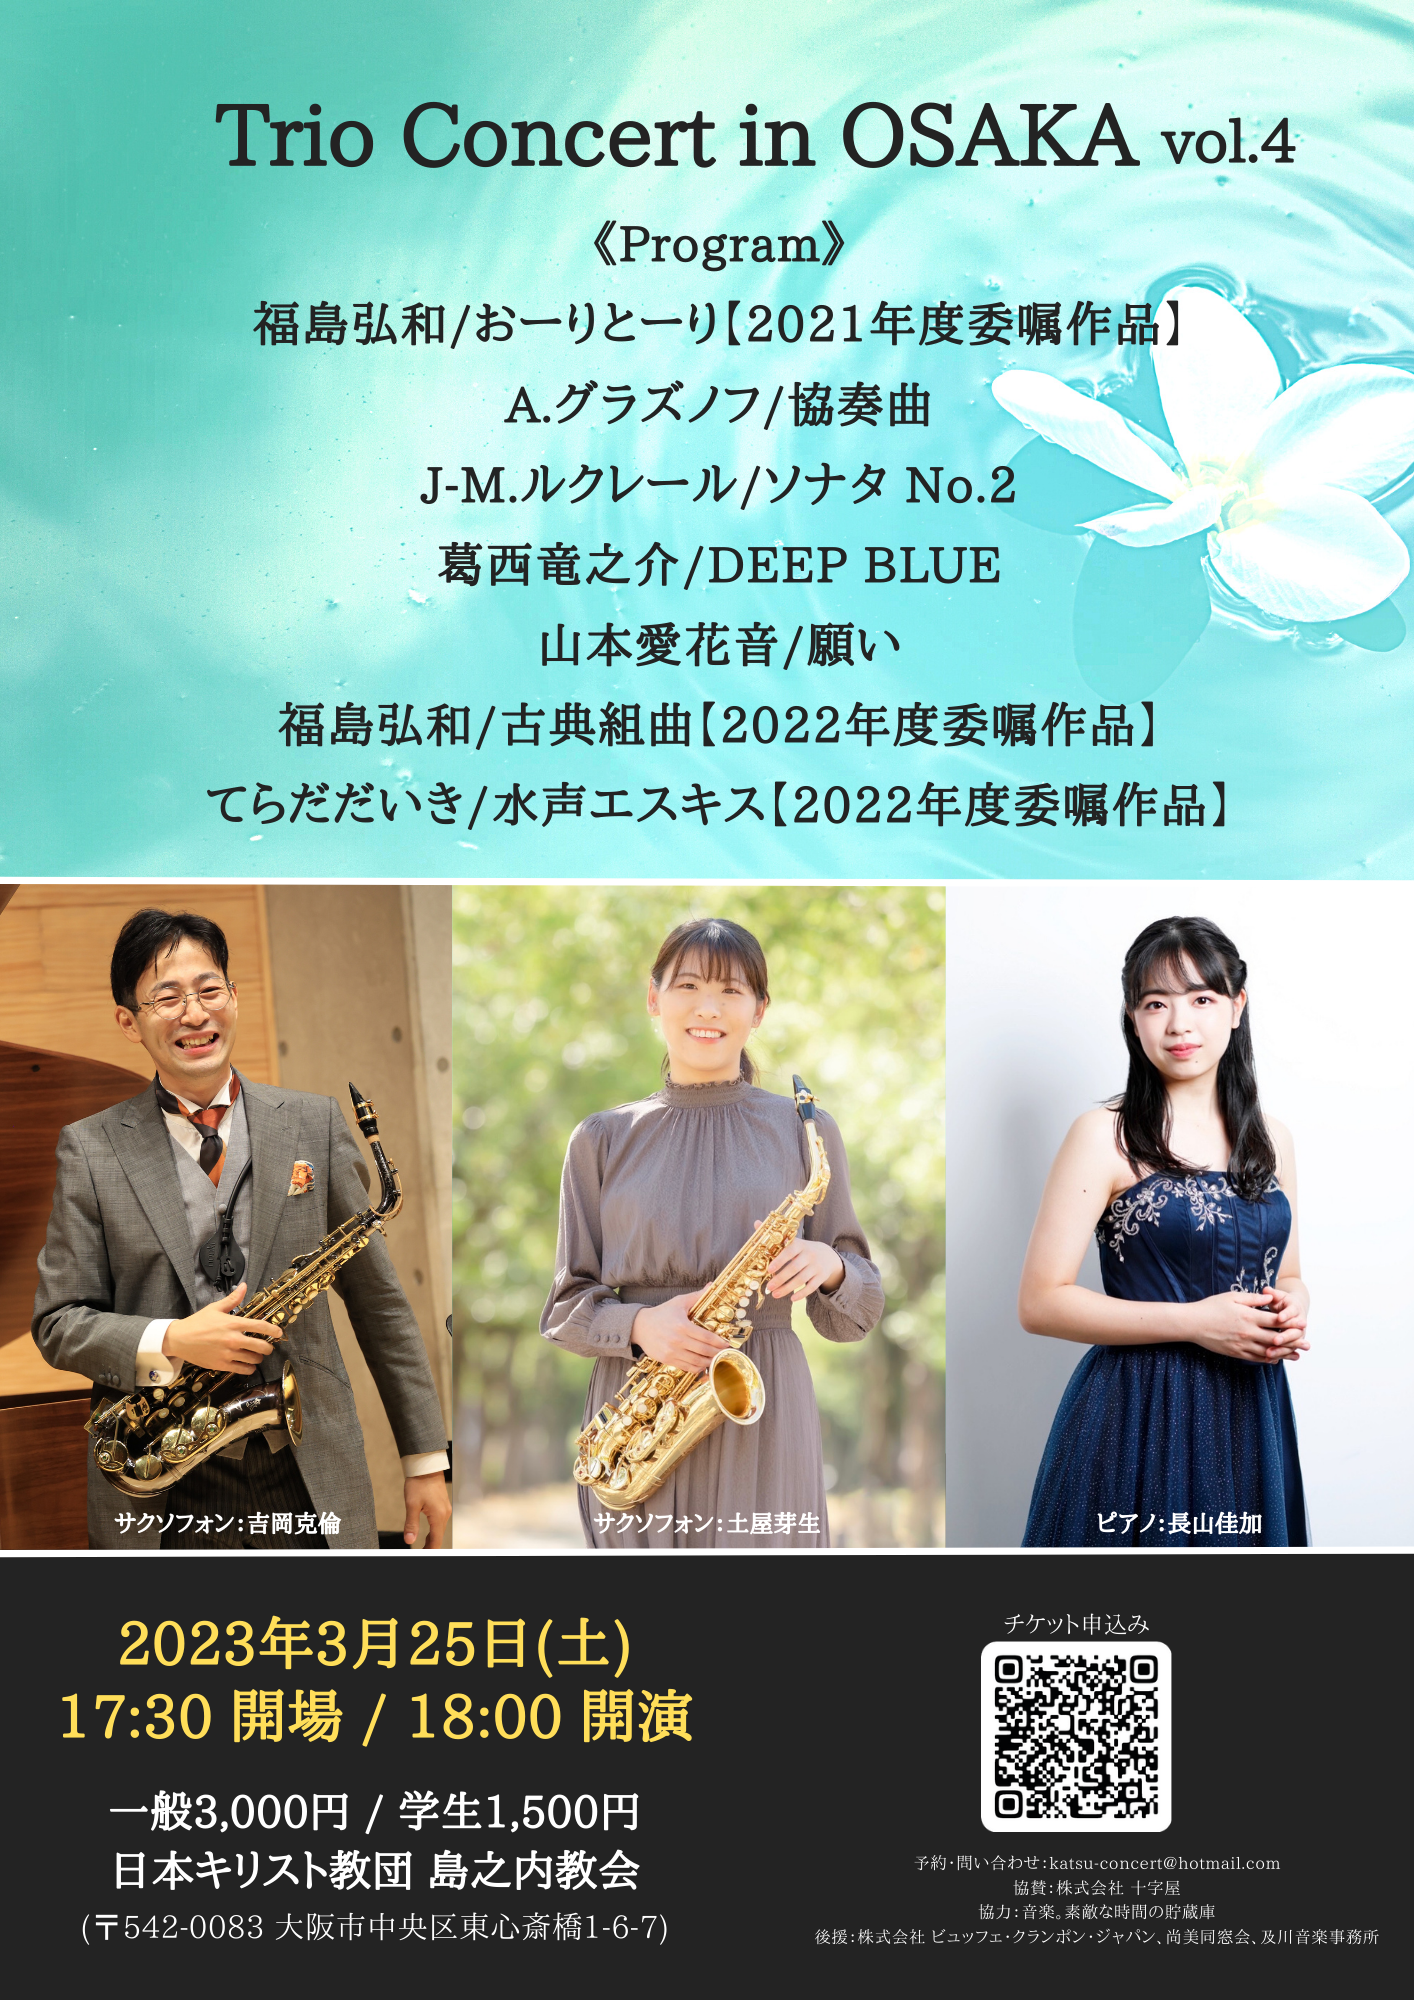 Trio Concert in OSAKA vol.4